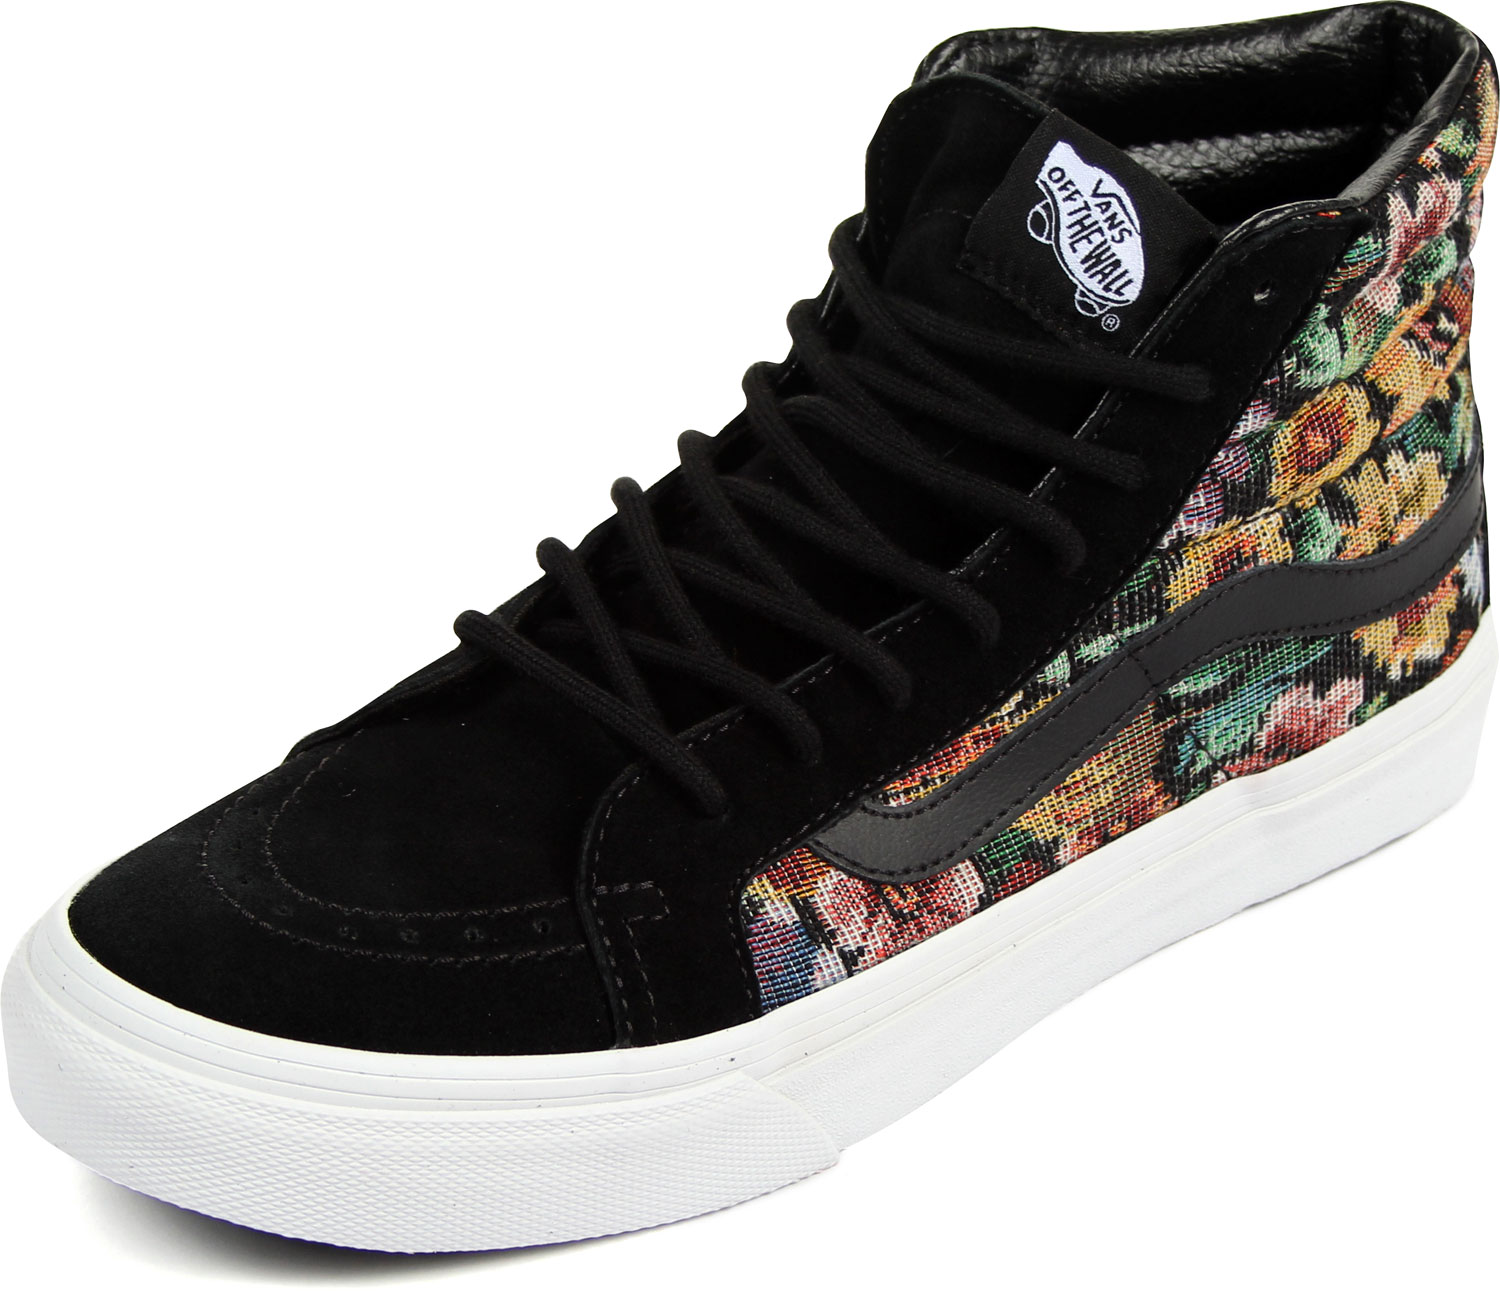 Vans - Unisex Sk8-Hi Slim Shoes in (Tapestry Floral) Black